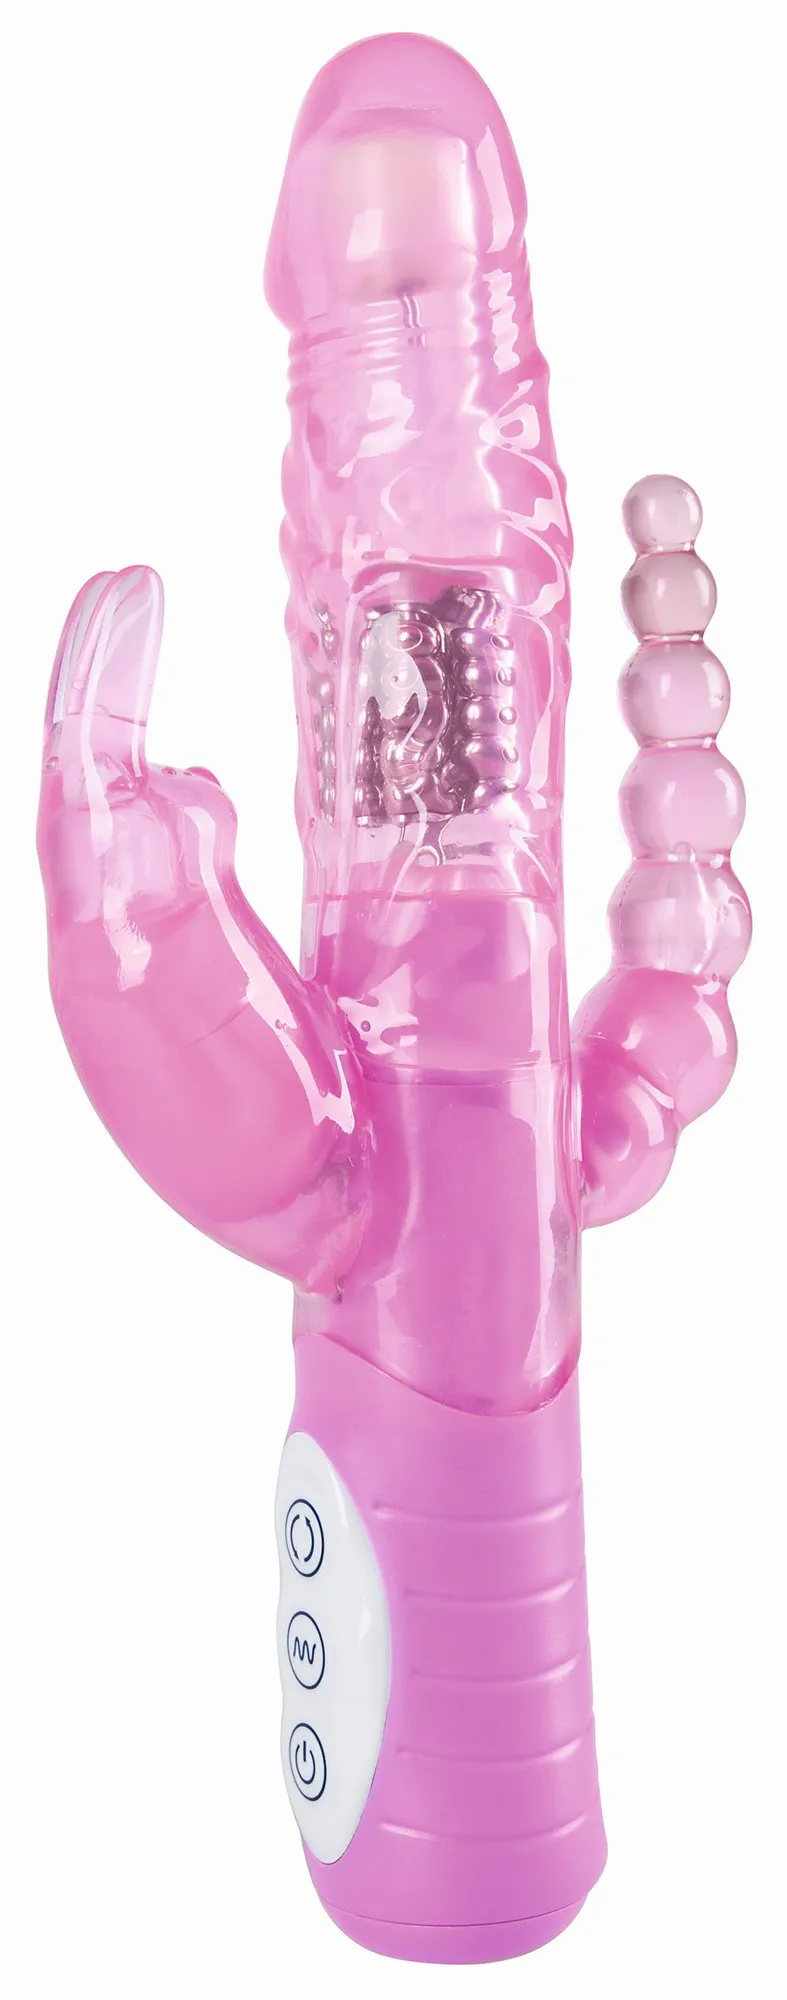 Análny kolík s guličkami, vibrátor s otáčavými guličkami a stimulátor klitorisu v jednom!